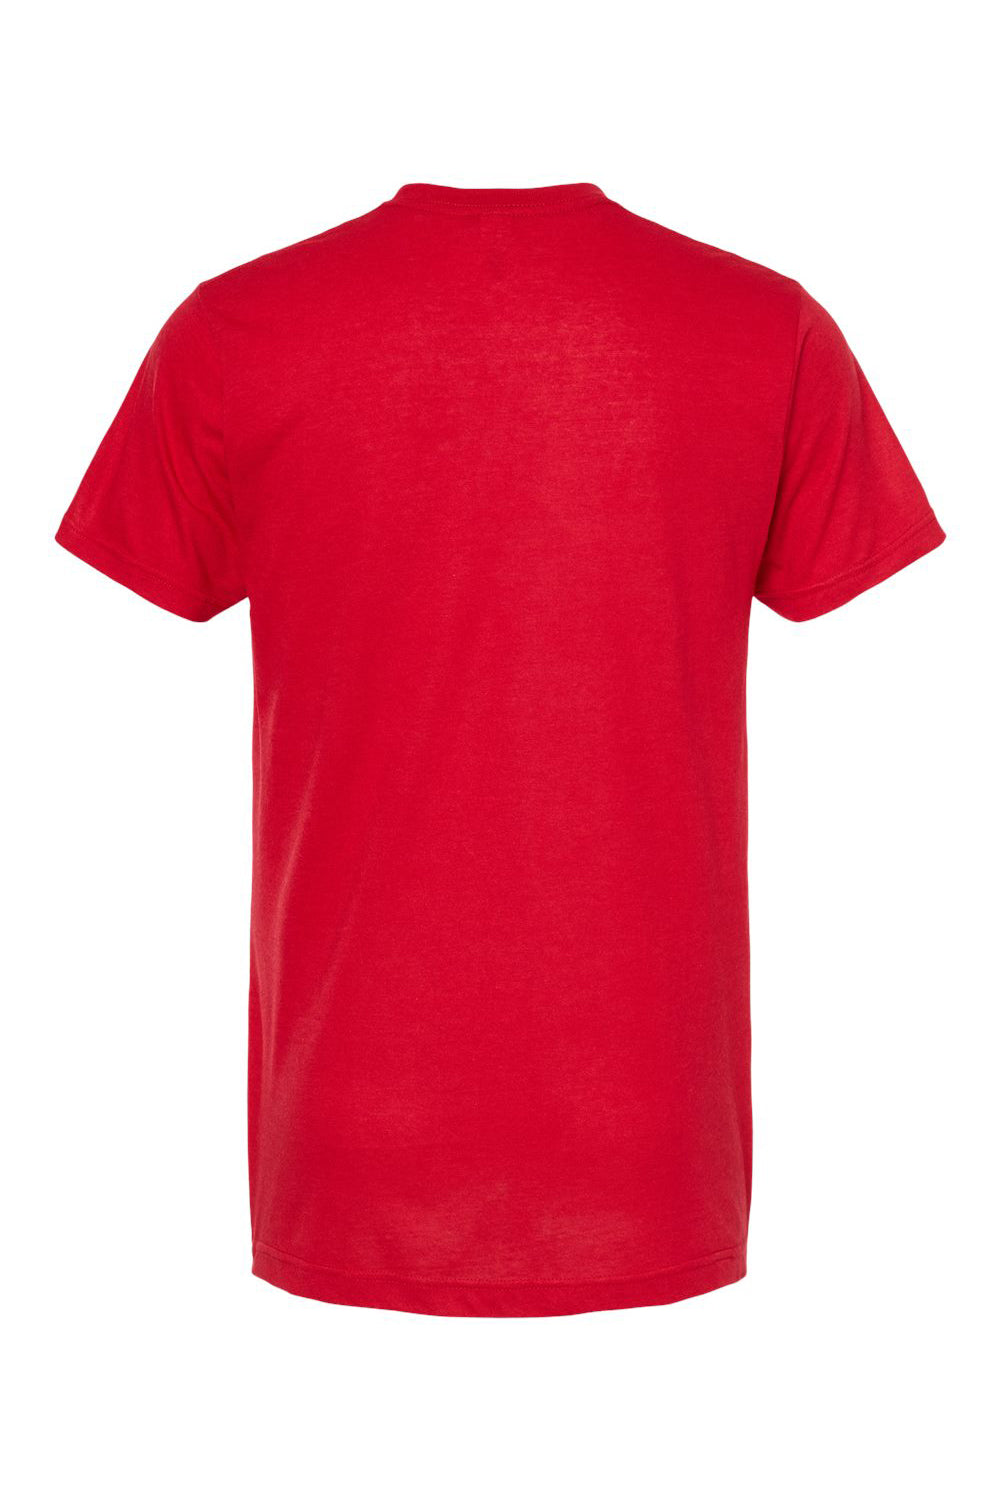 Tultex 207 Mens Poly-Rich Short Sleeve V-Neck T-Shirt Red Flat Back